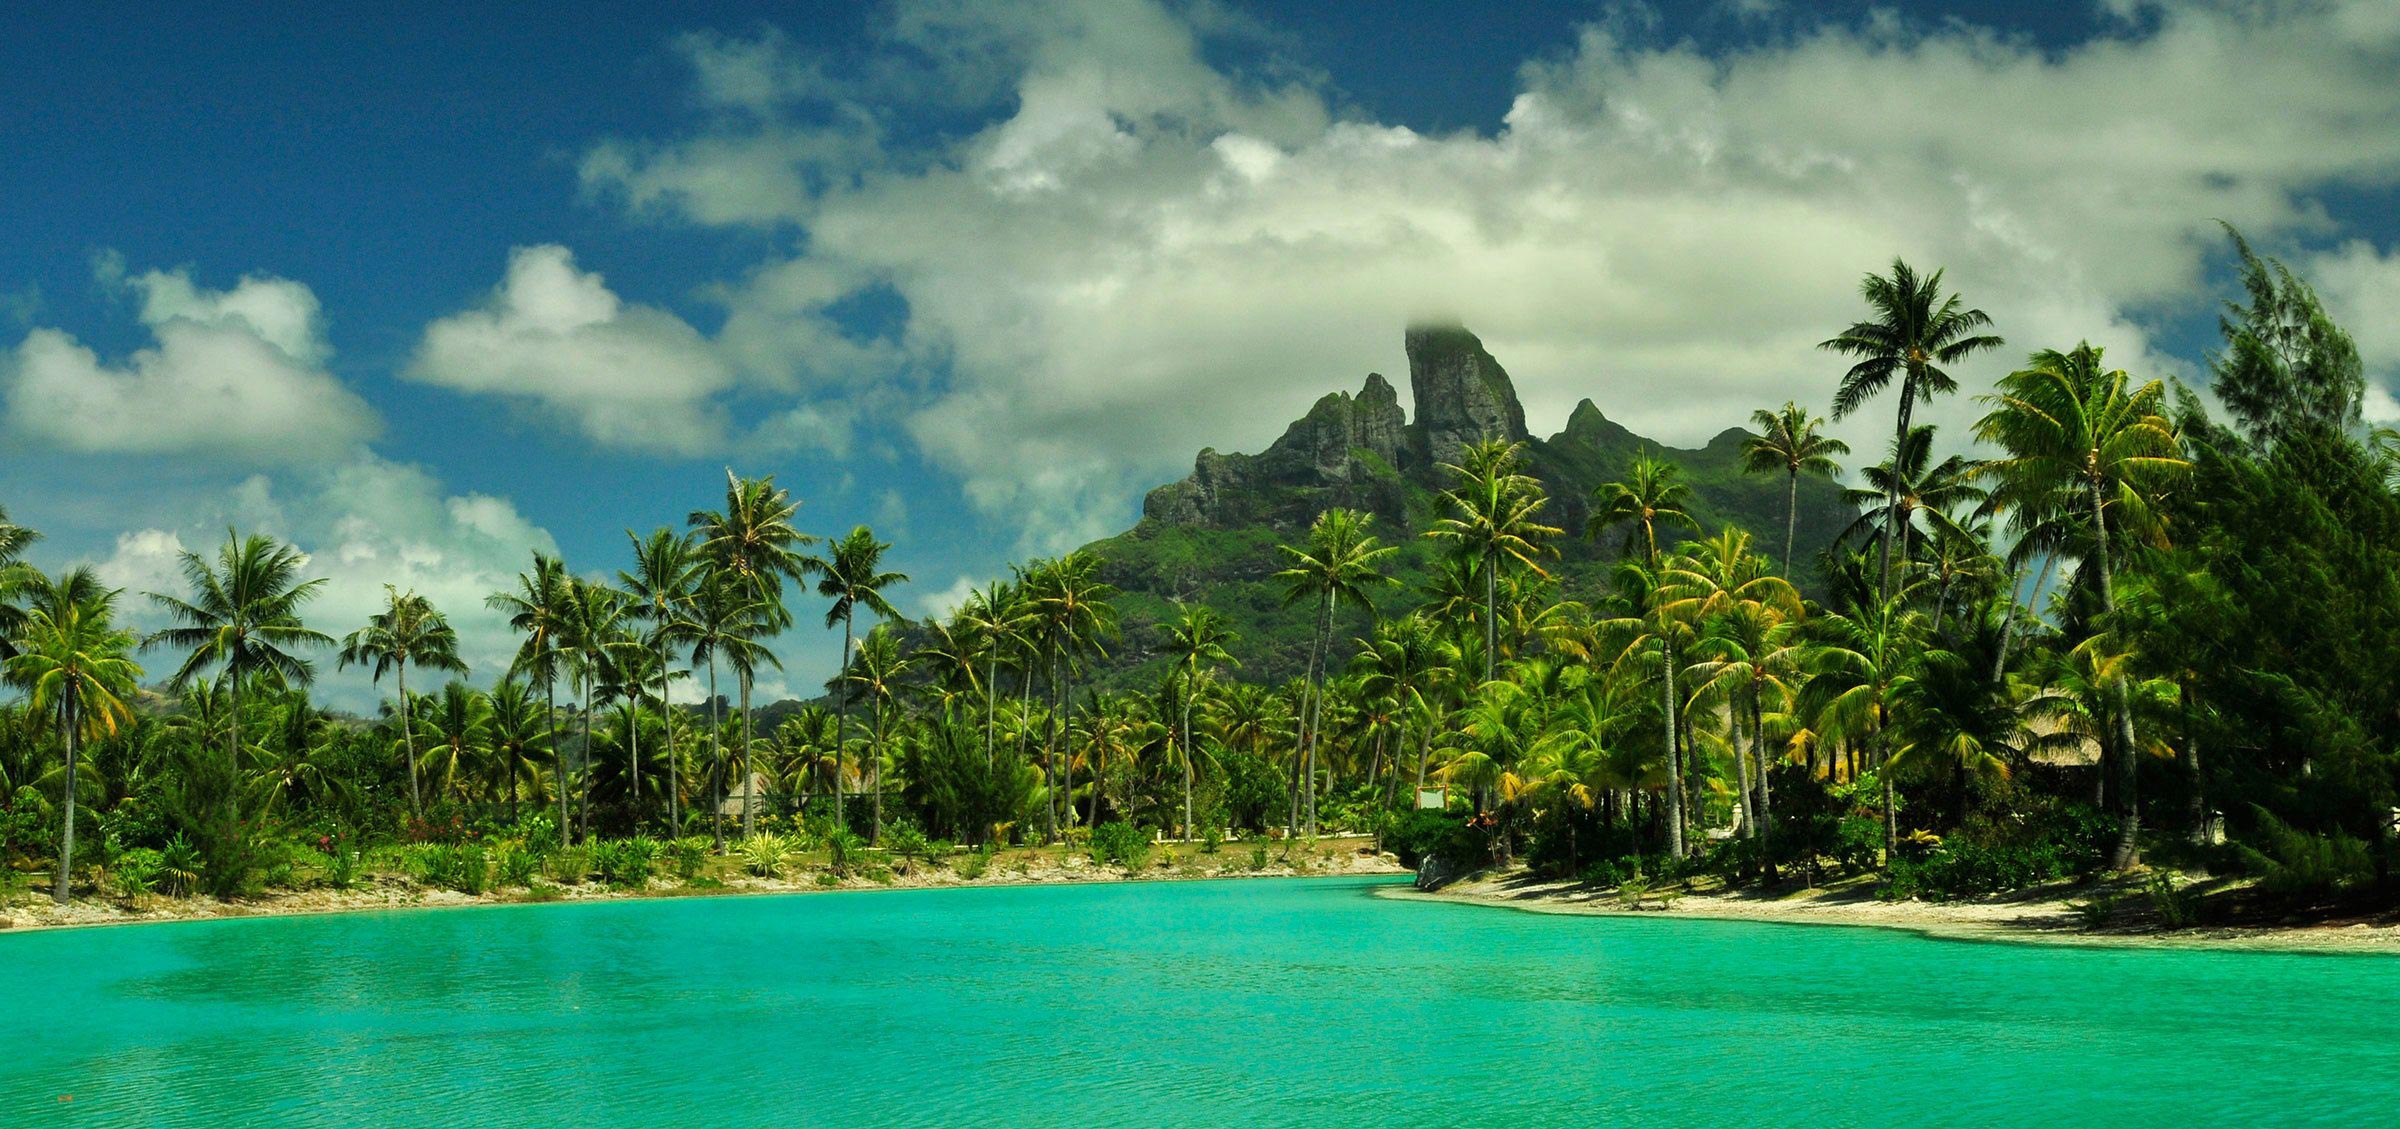 mountains and palm trees next to a turquoise ocean in bora bora